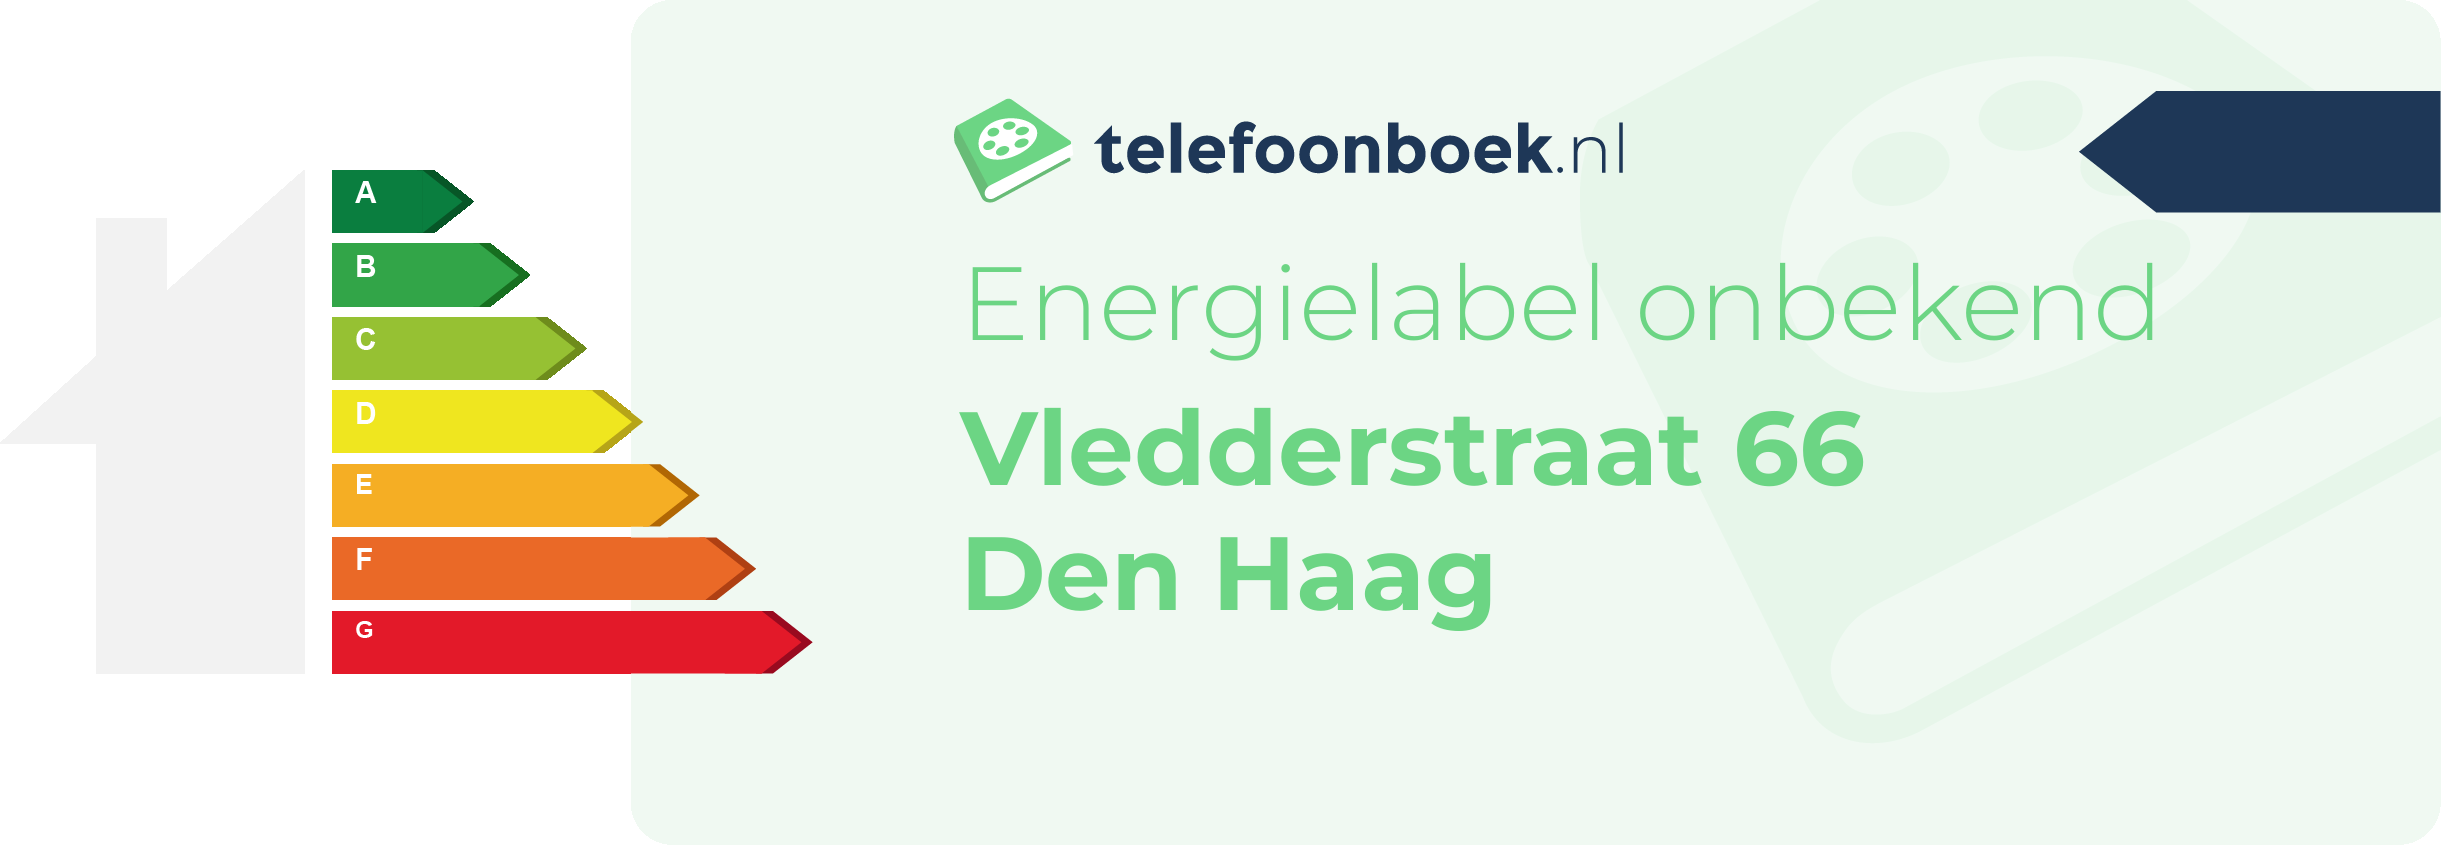 Energielabel Vledderstraat 66 Den Haag